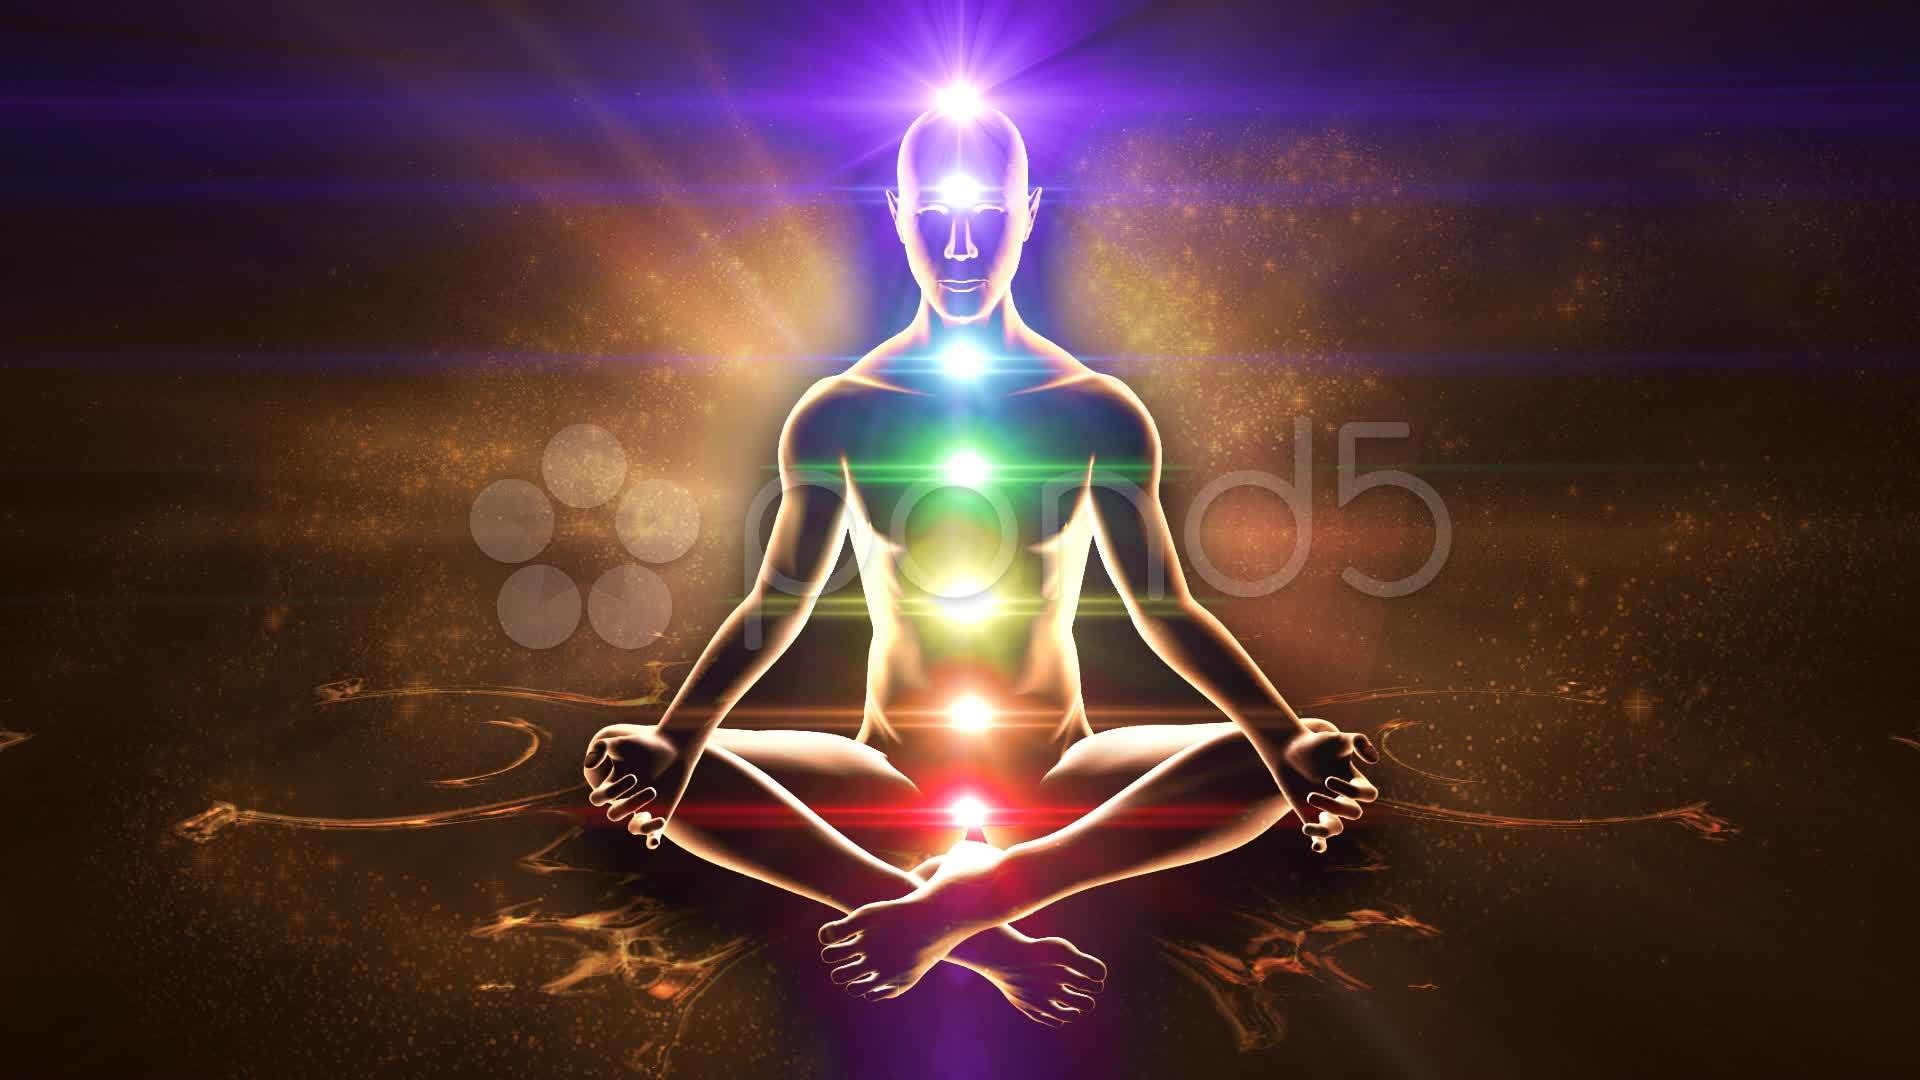 1920x1080 Chakra Meditation Cleansing Balancing amp Healing with